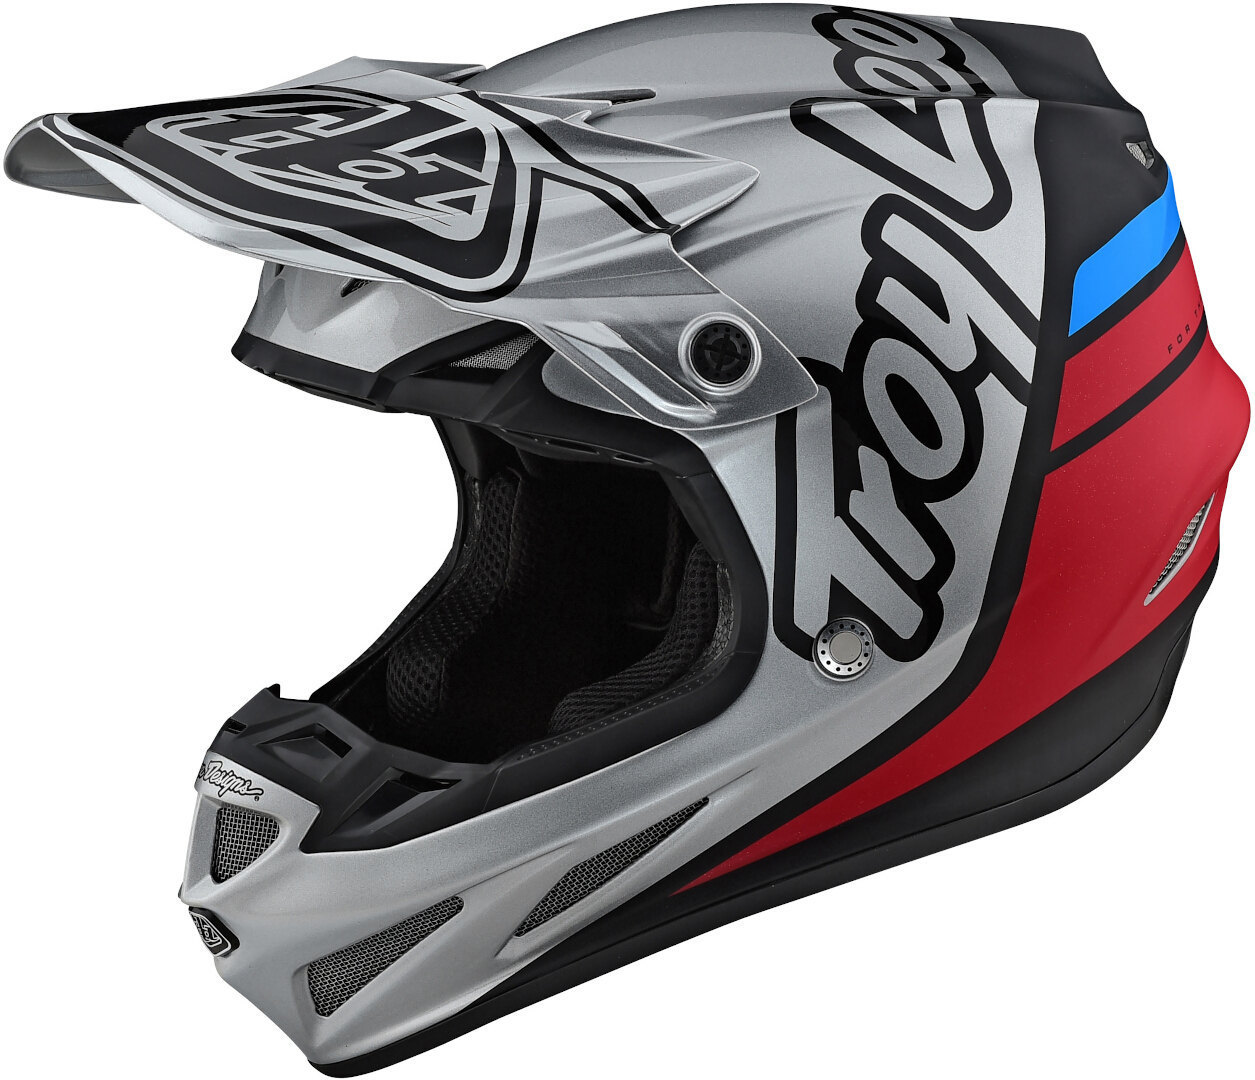 Image of Troy Lee Designs SE4 Silhouette MIPS Casco Motocross, nero-rosso-argento, dimensione S